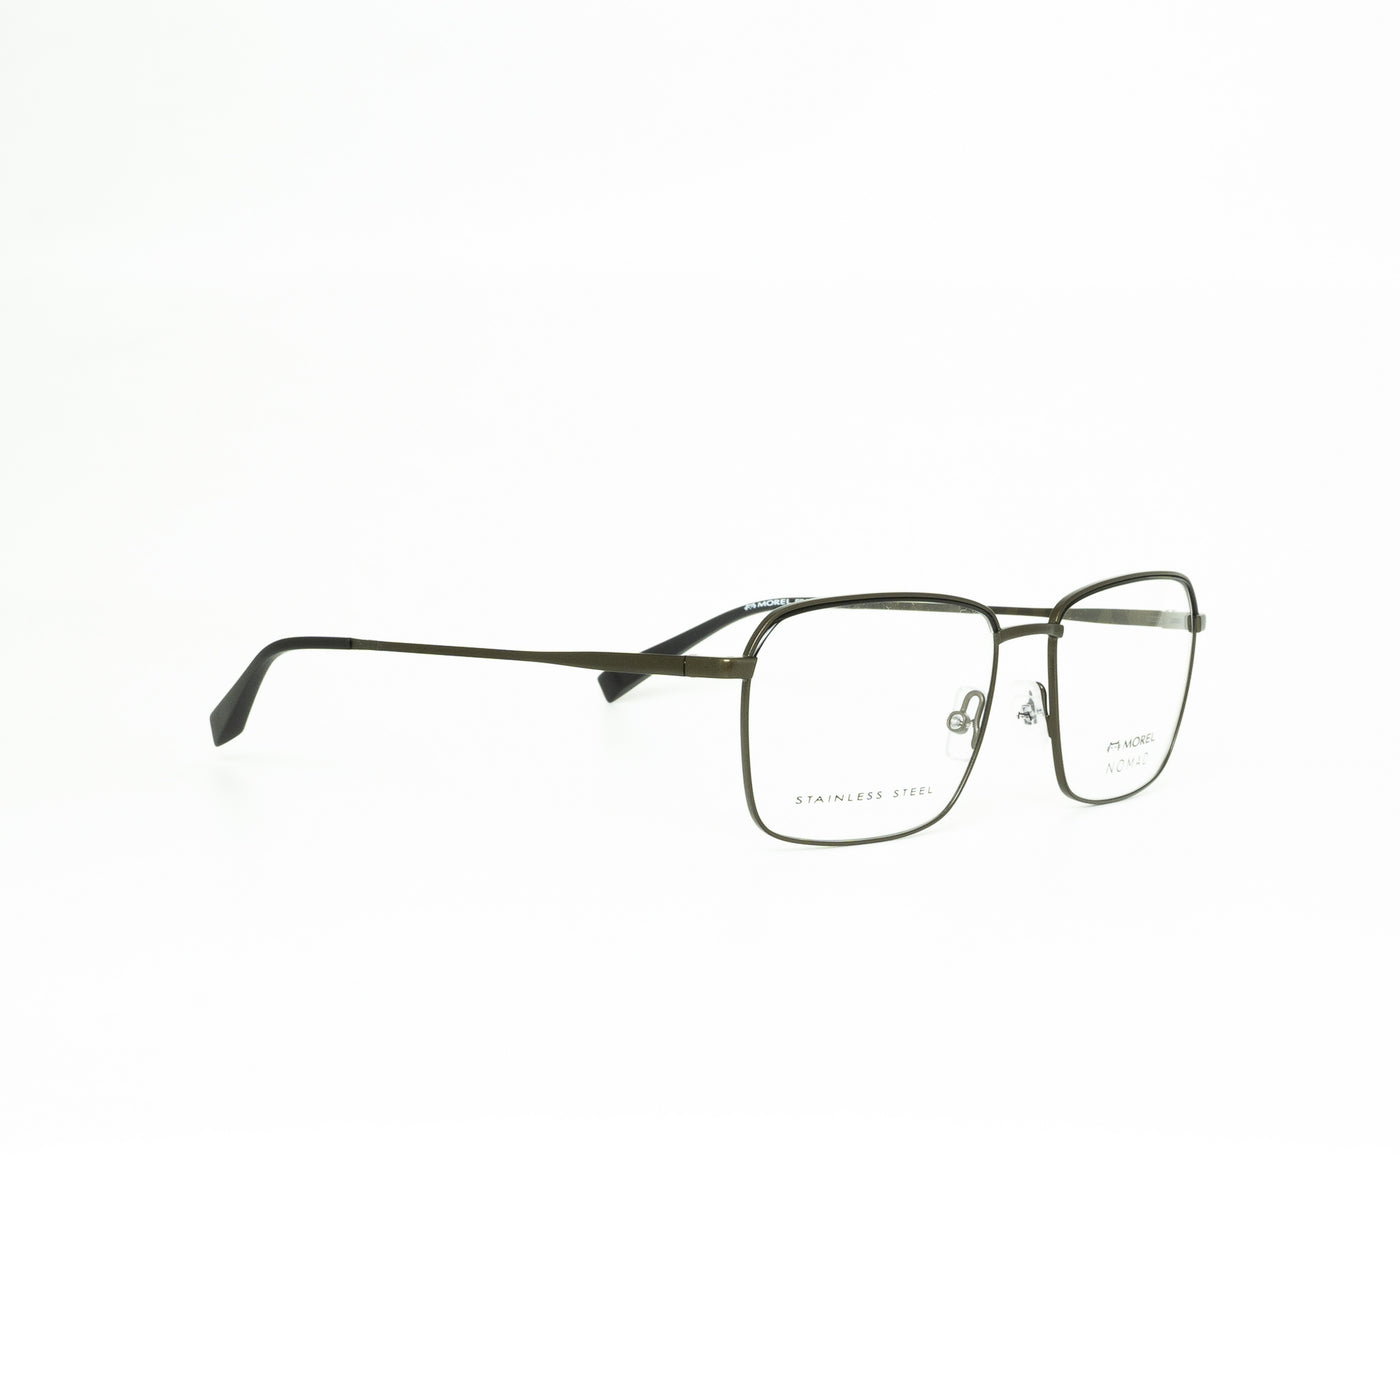 Oga OGA40133NVN1255 | Eyeglasses - Vision Express Optical Philippines